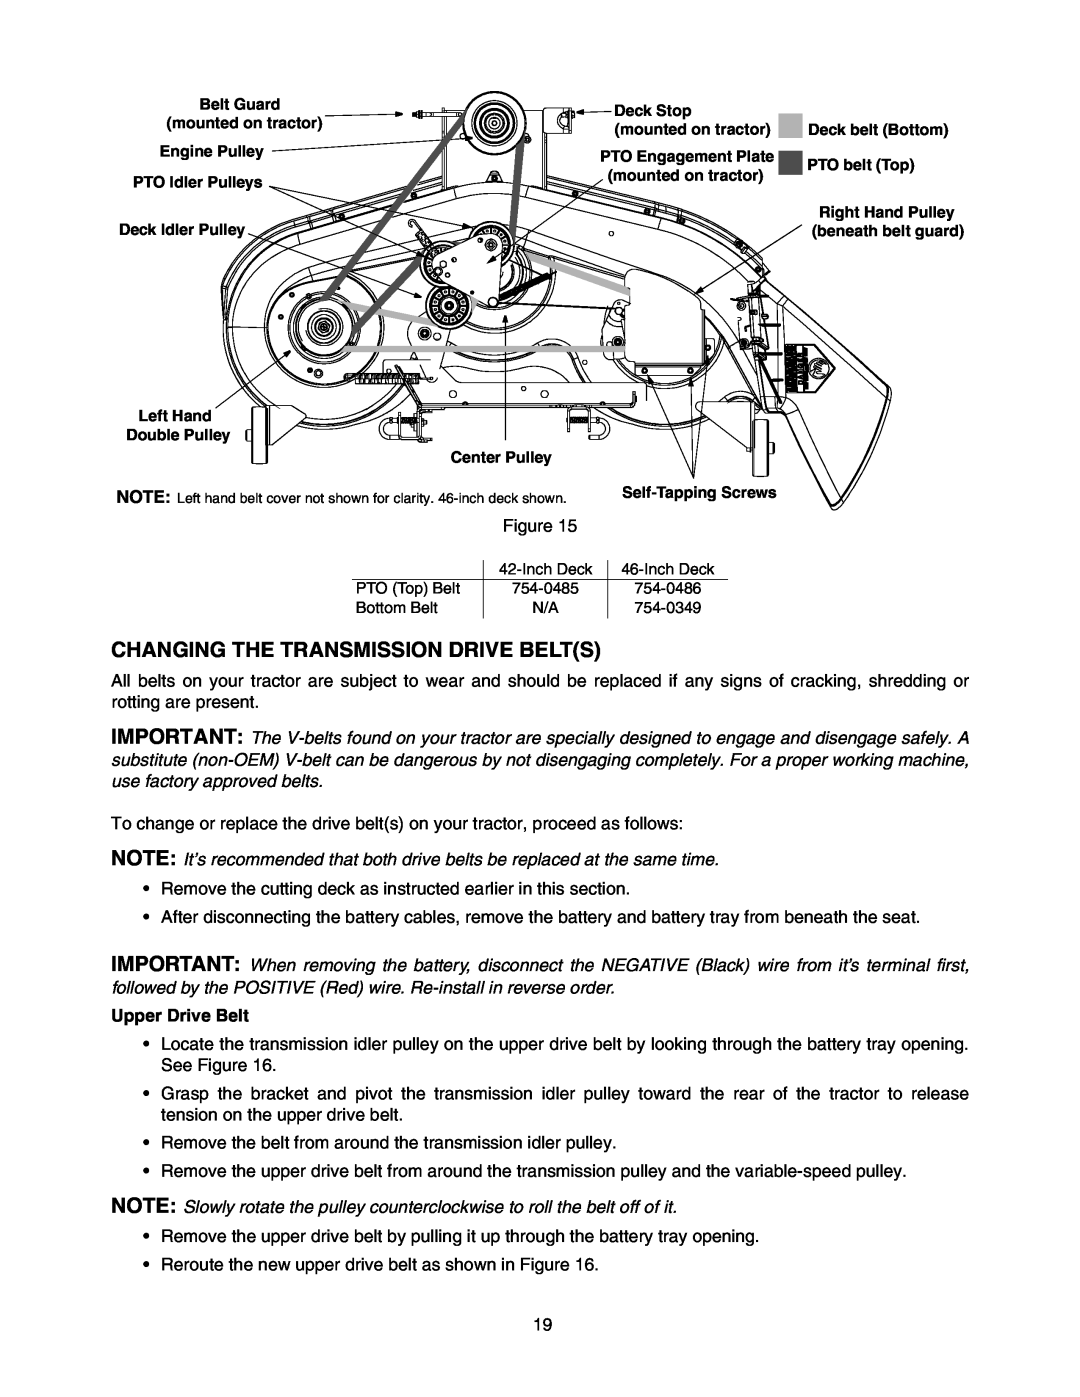 MTD 608, 609 manual Changing The Transmission Drive Belts, Upper Drive Belt 